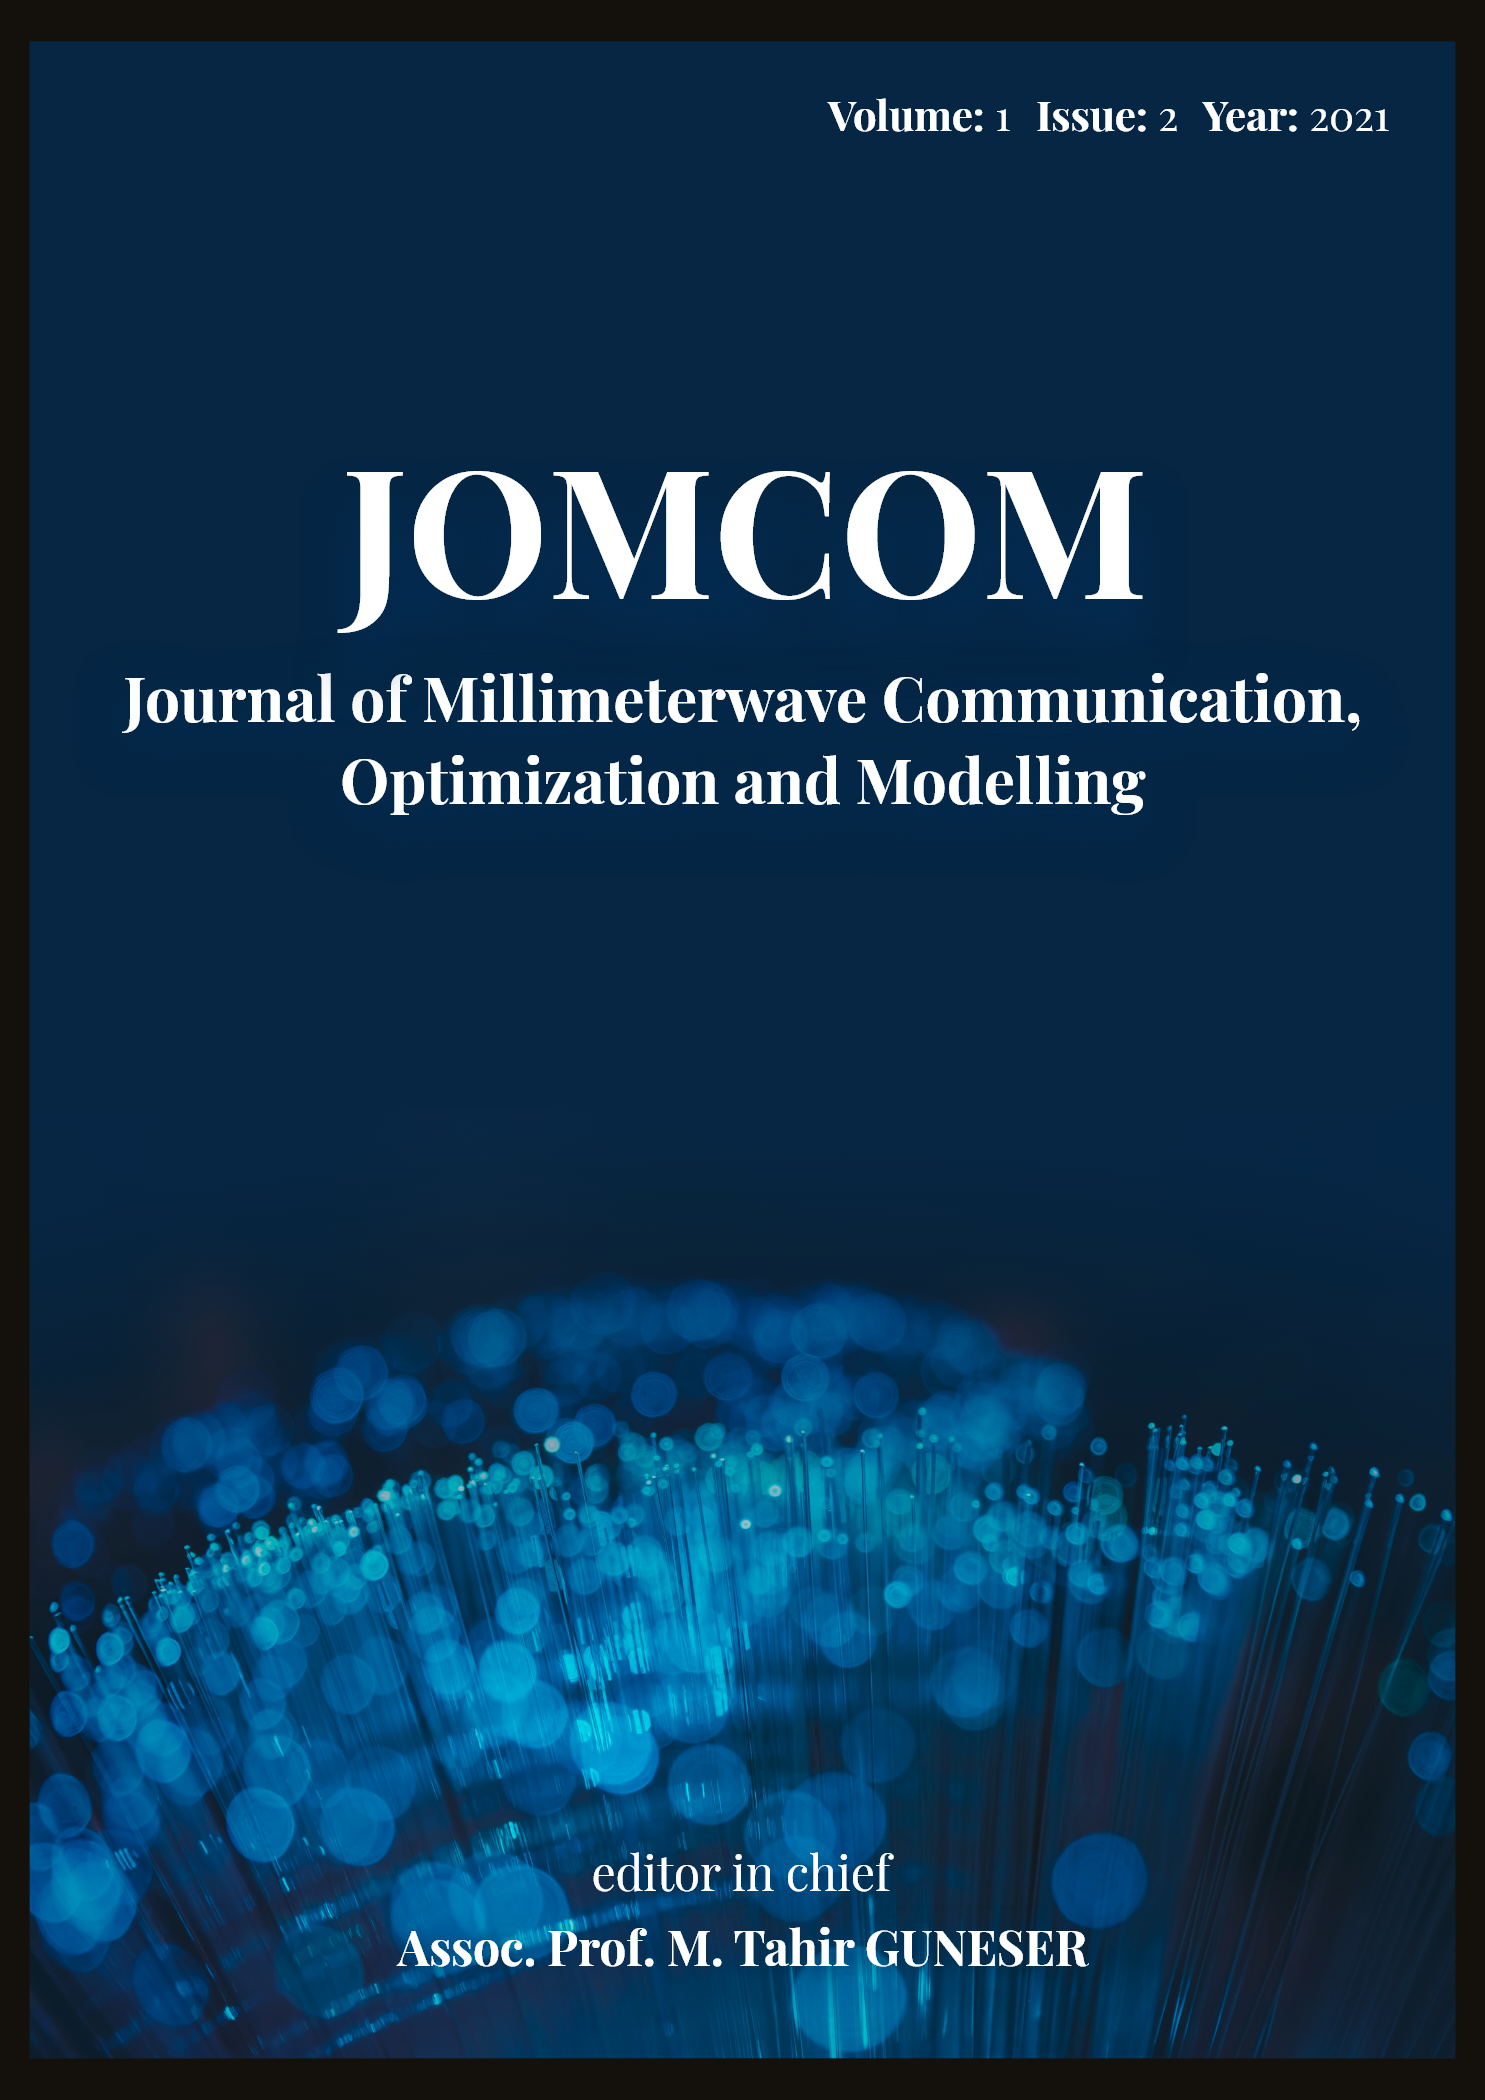 indexed journal communication engineering